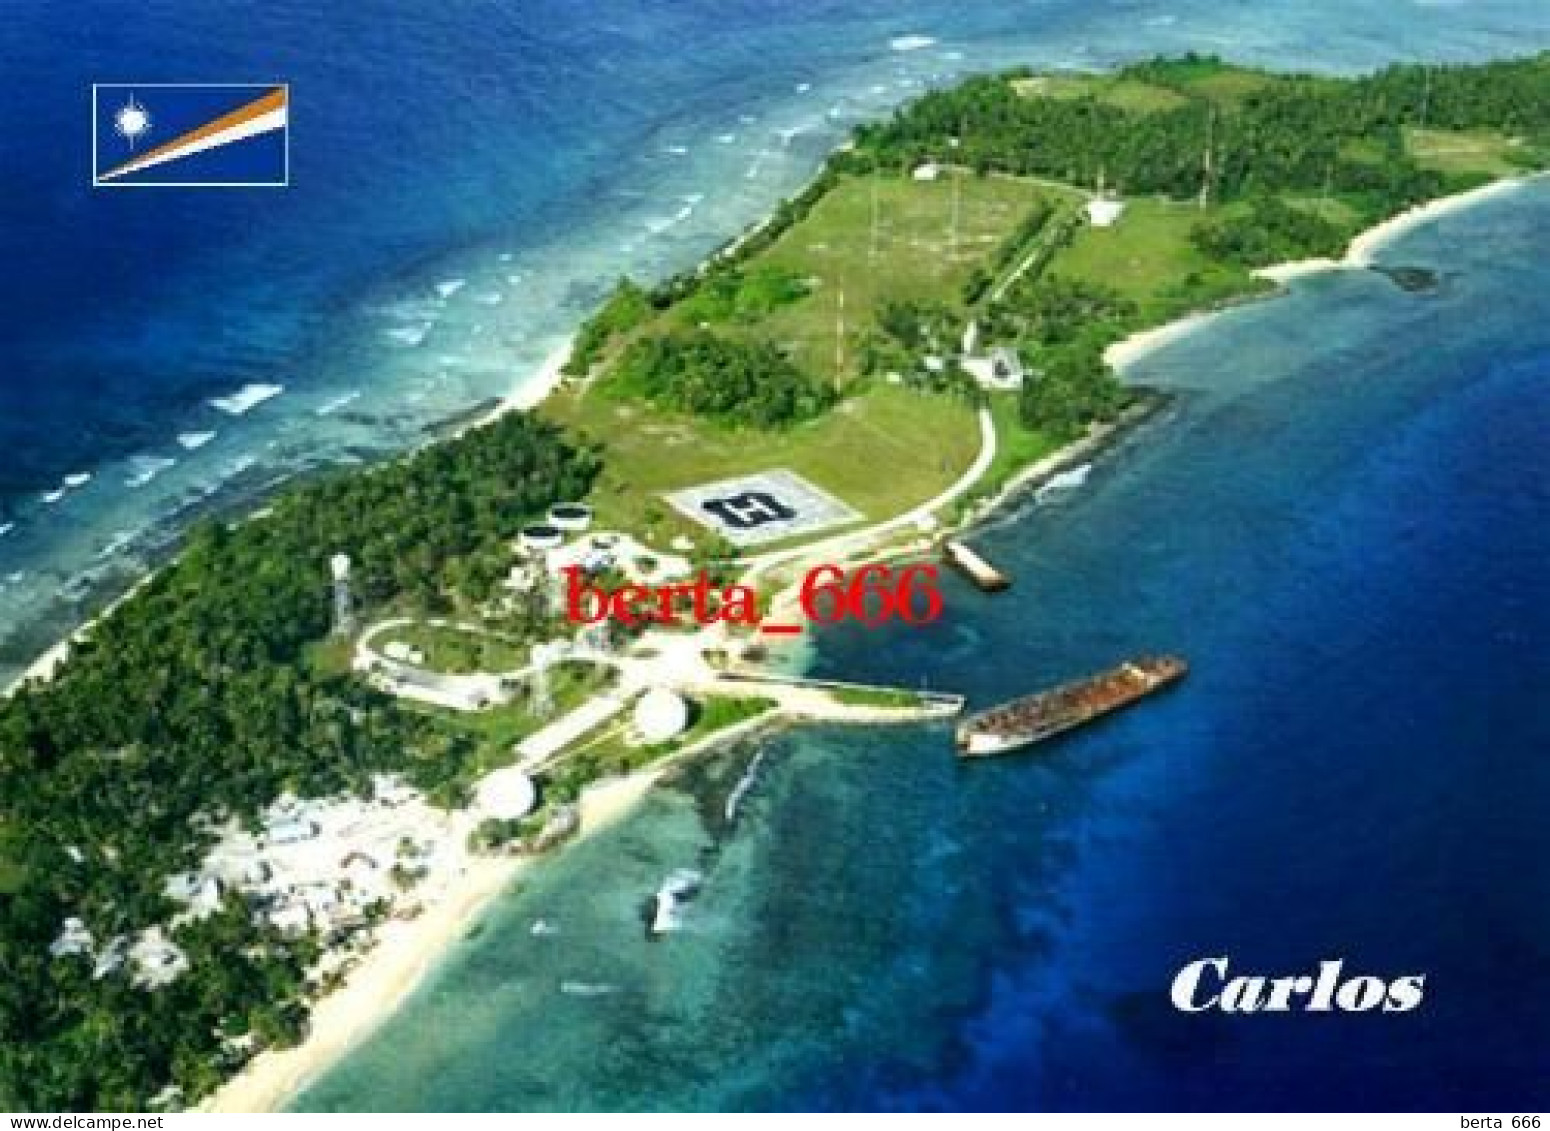 Marshall Islands Carlos Aerial View New Postcard - Marshall Islands